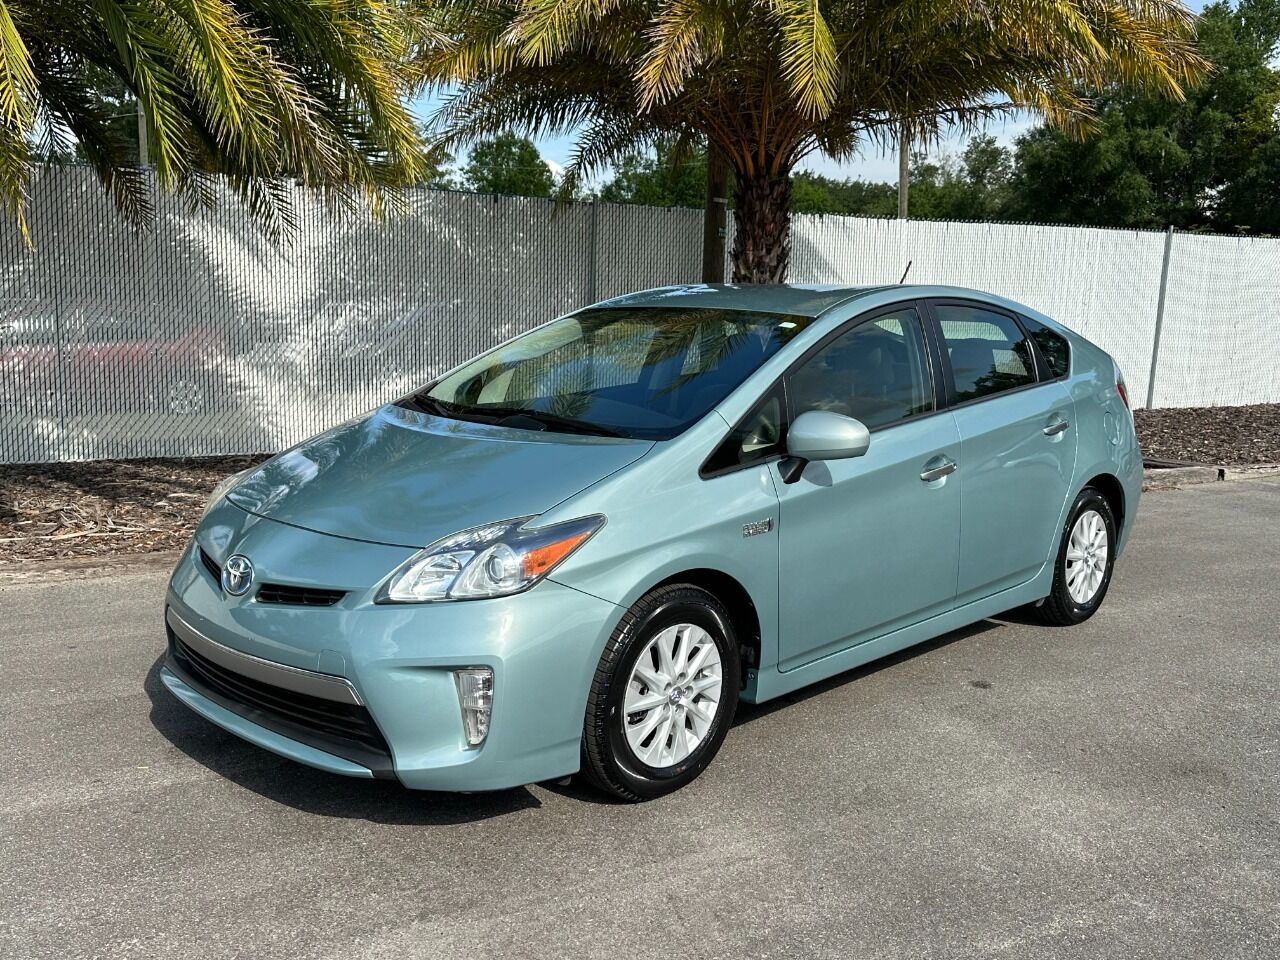 Toyota Prius Plug-in Hybrid For Sale - Carsforsale.com®